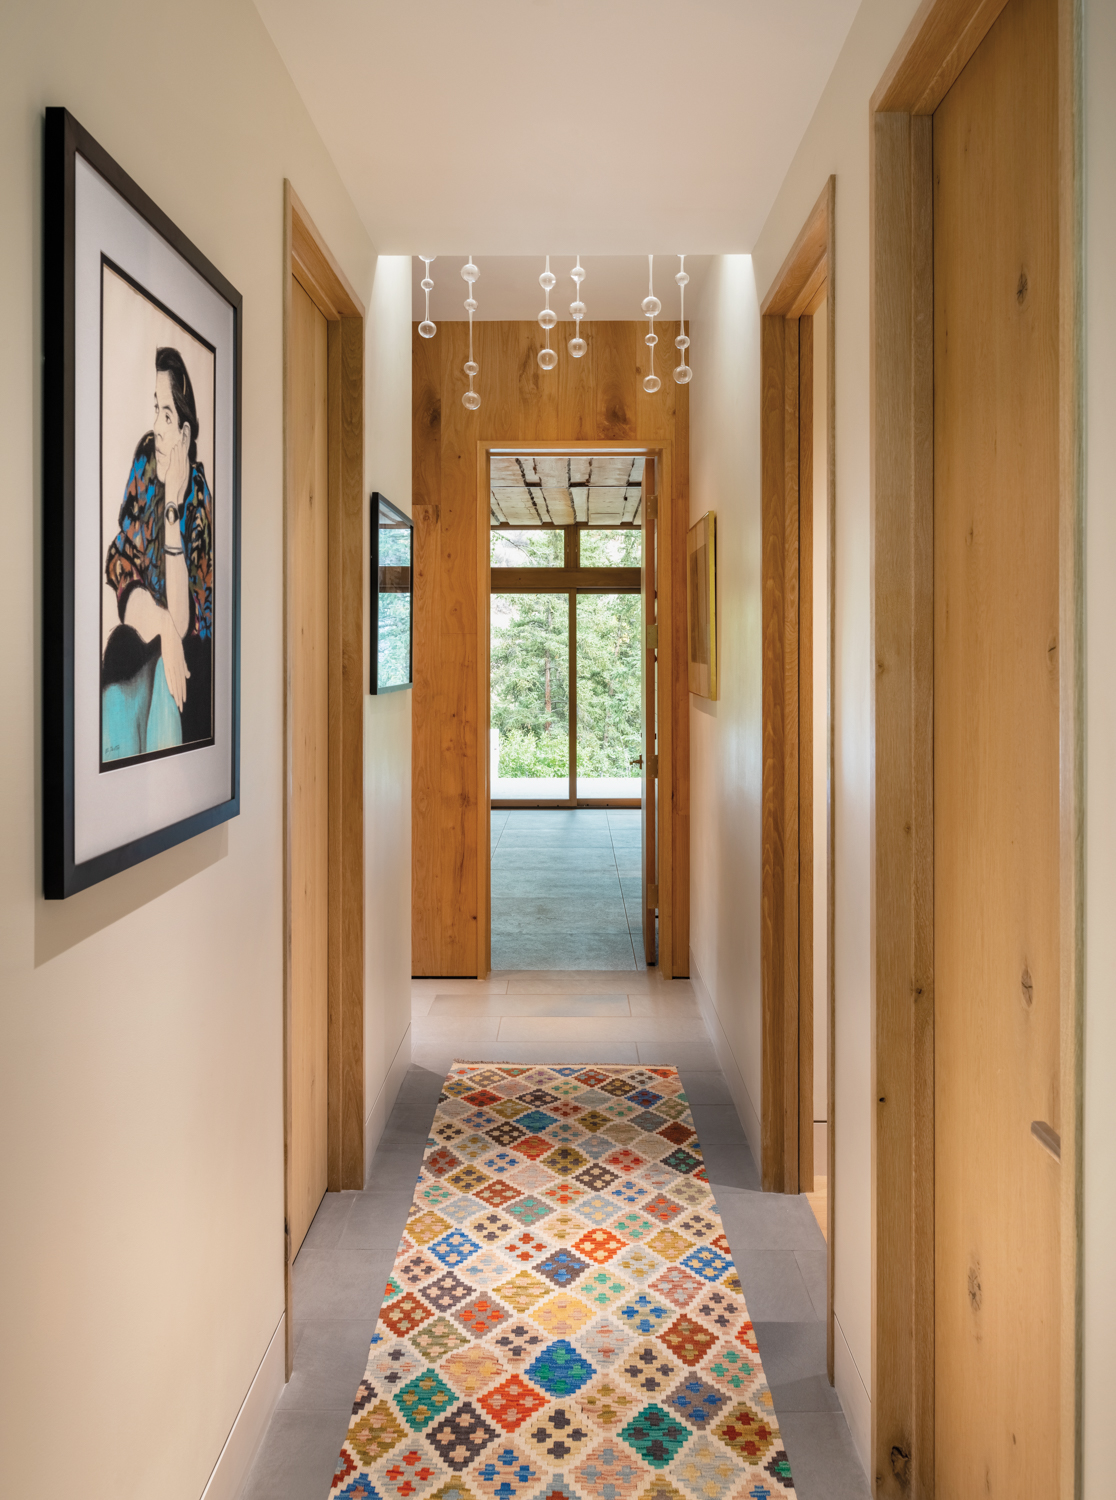 Hallway with a colorful kilim...